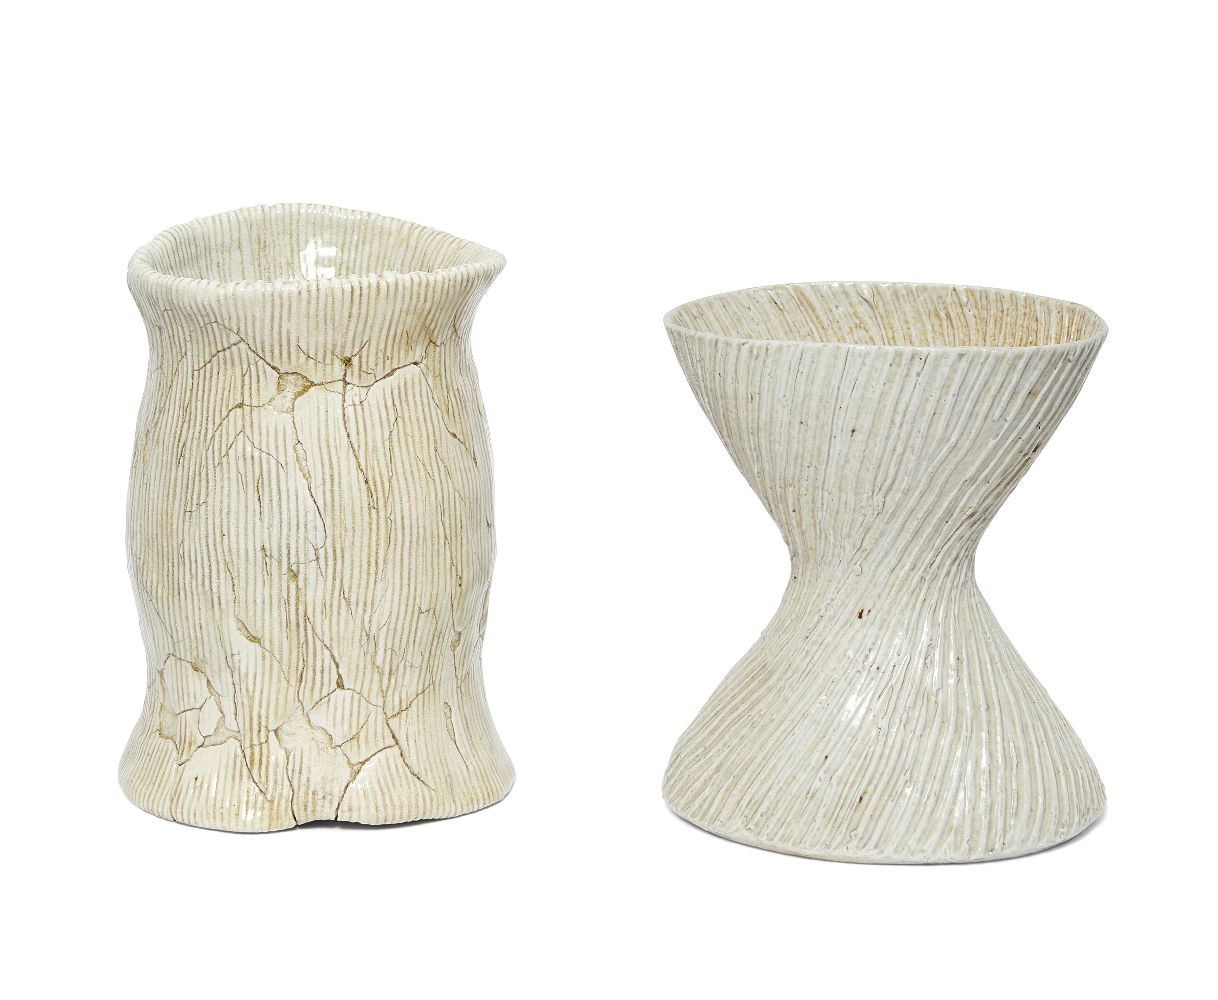 Sarah Walton (1945-), a waisted vase c. 1990, impressed seal to base A waisted stoneware vase with